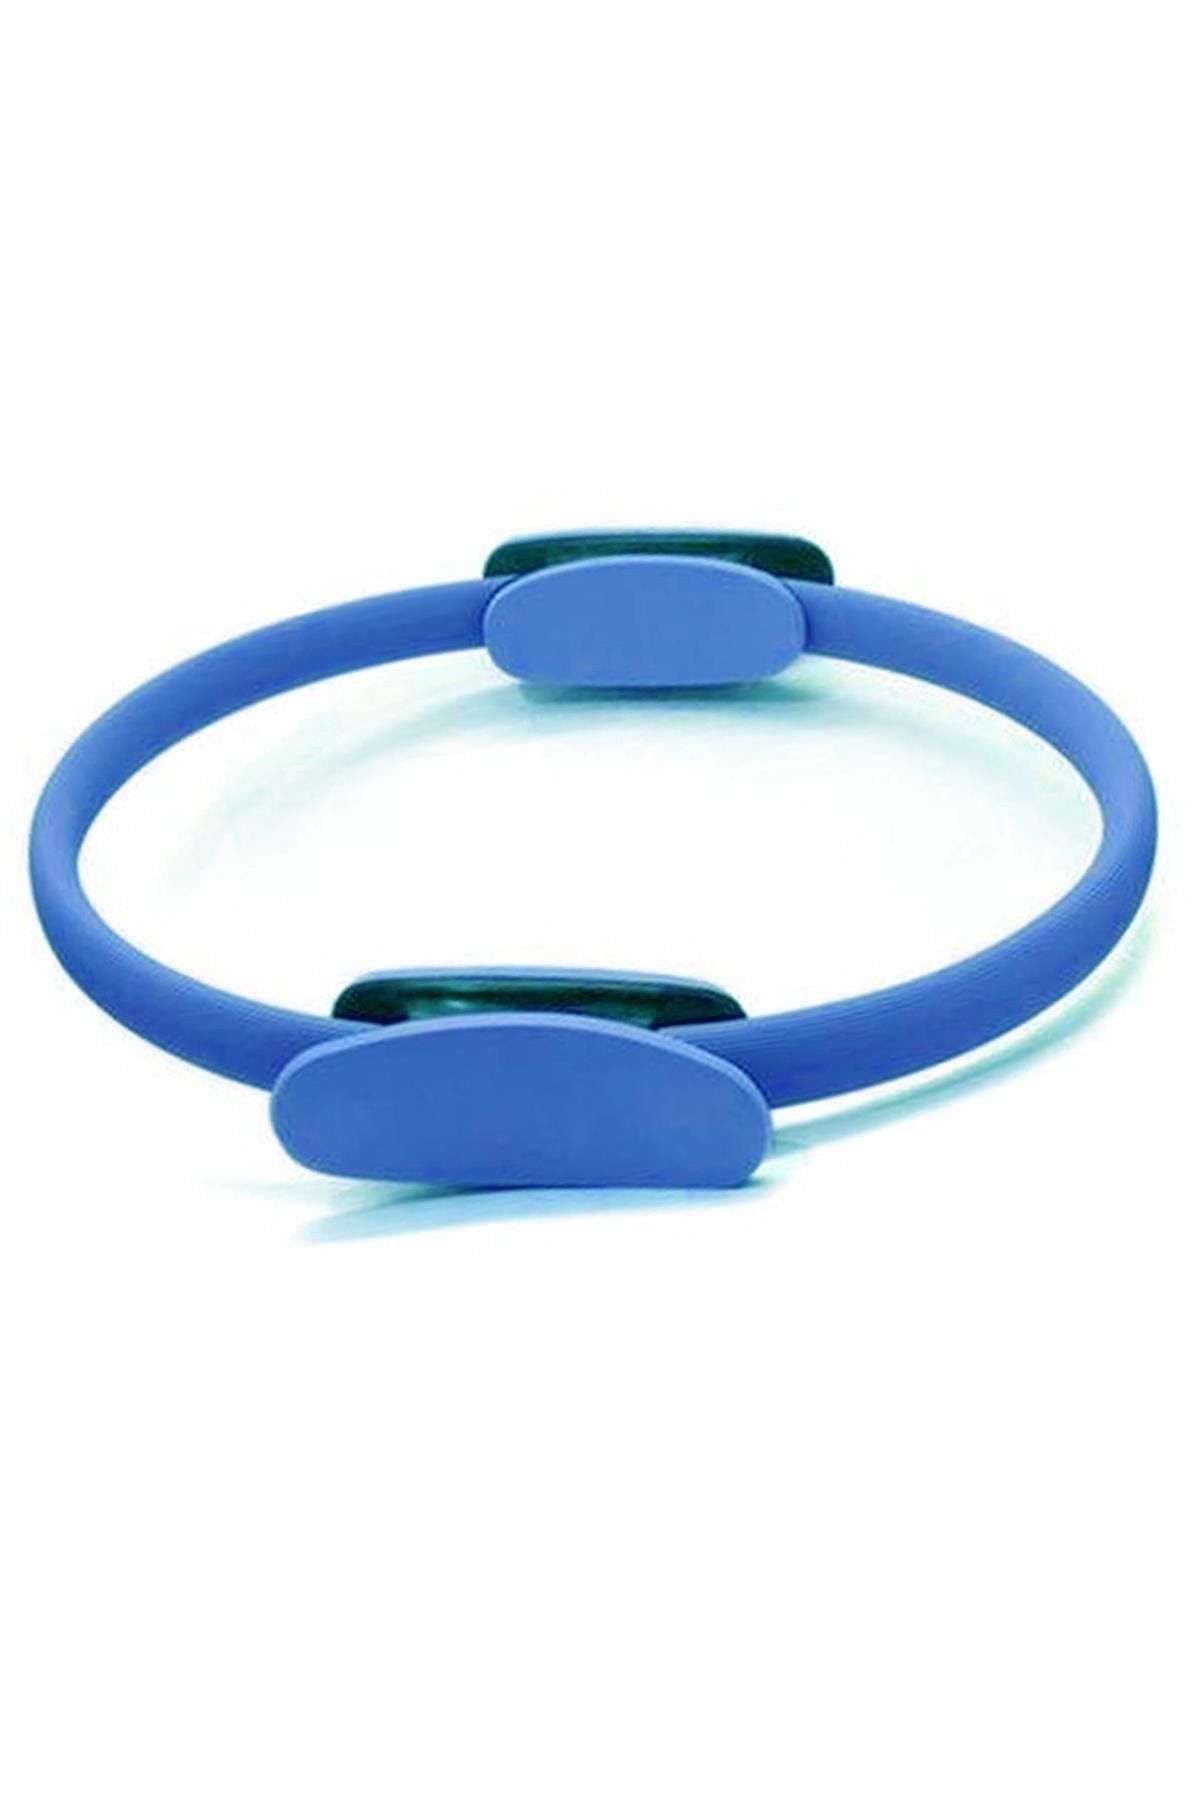 Avessa Pilates Çemberi Bpc-100 Blue Mavi Renk Poşette